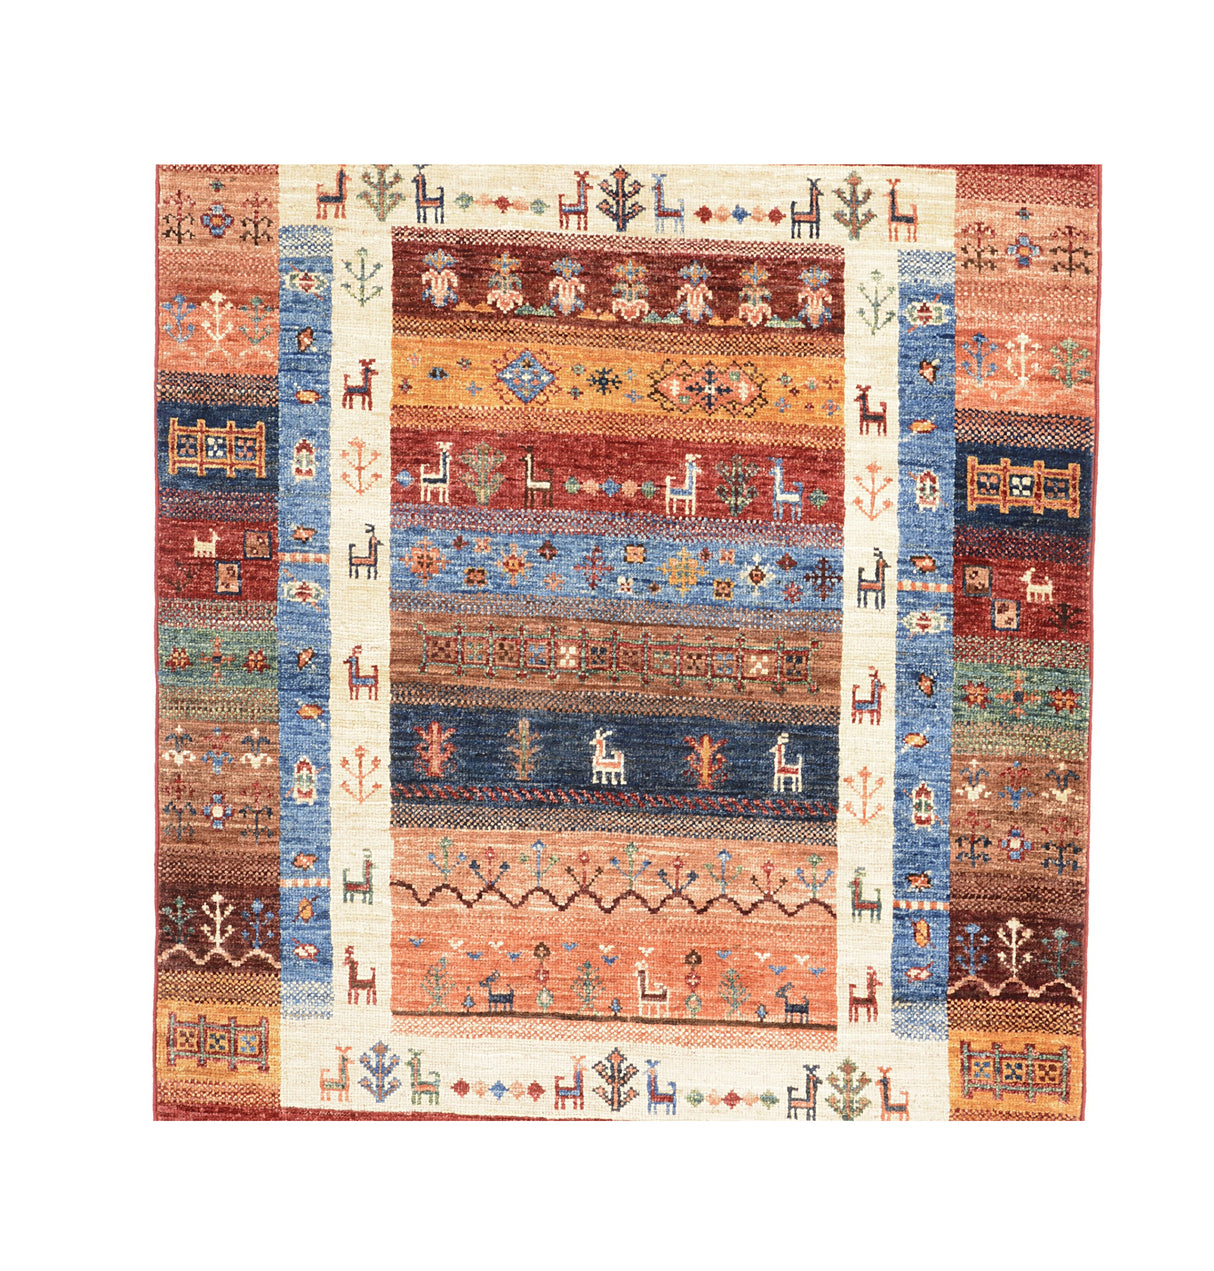 Ziegler Carpet | 133 x 90 cm